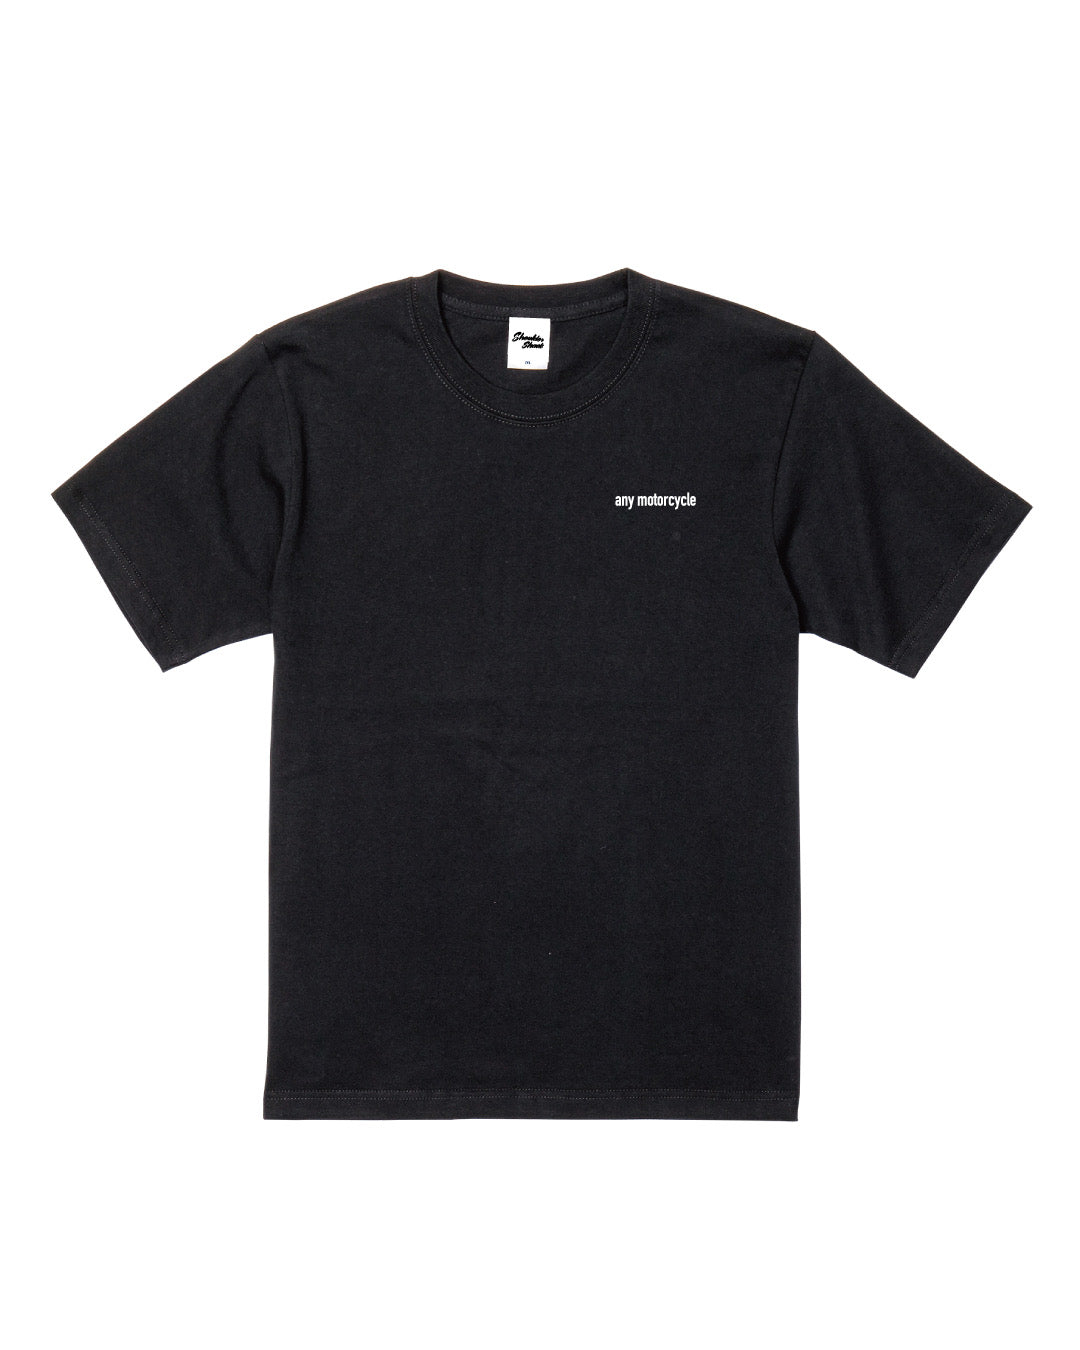 any motorcycle 刺繍ロゴTシャツ/Black